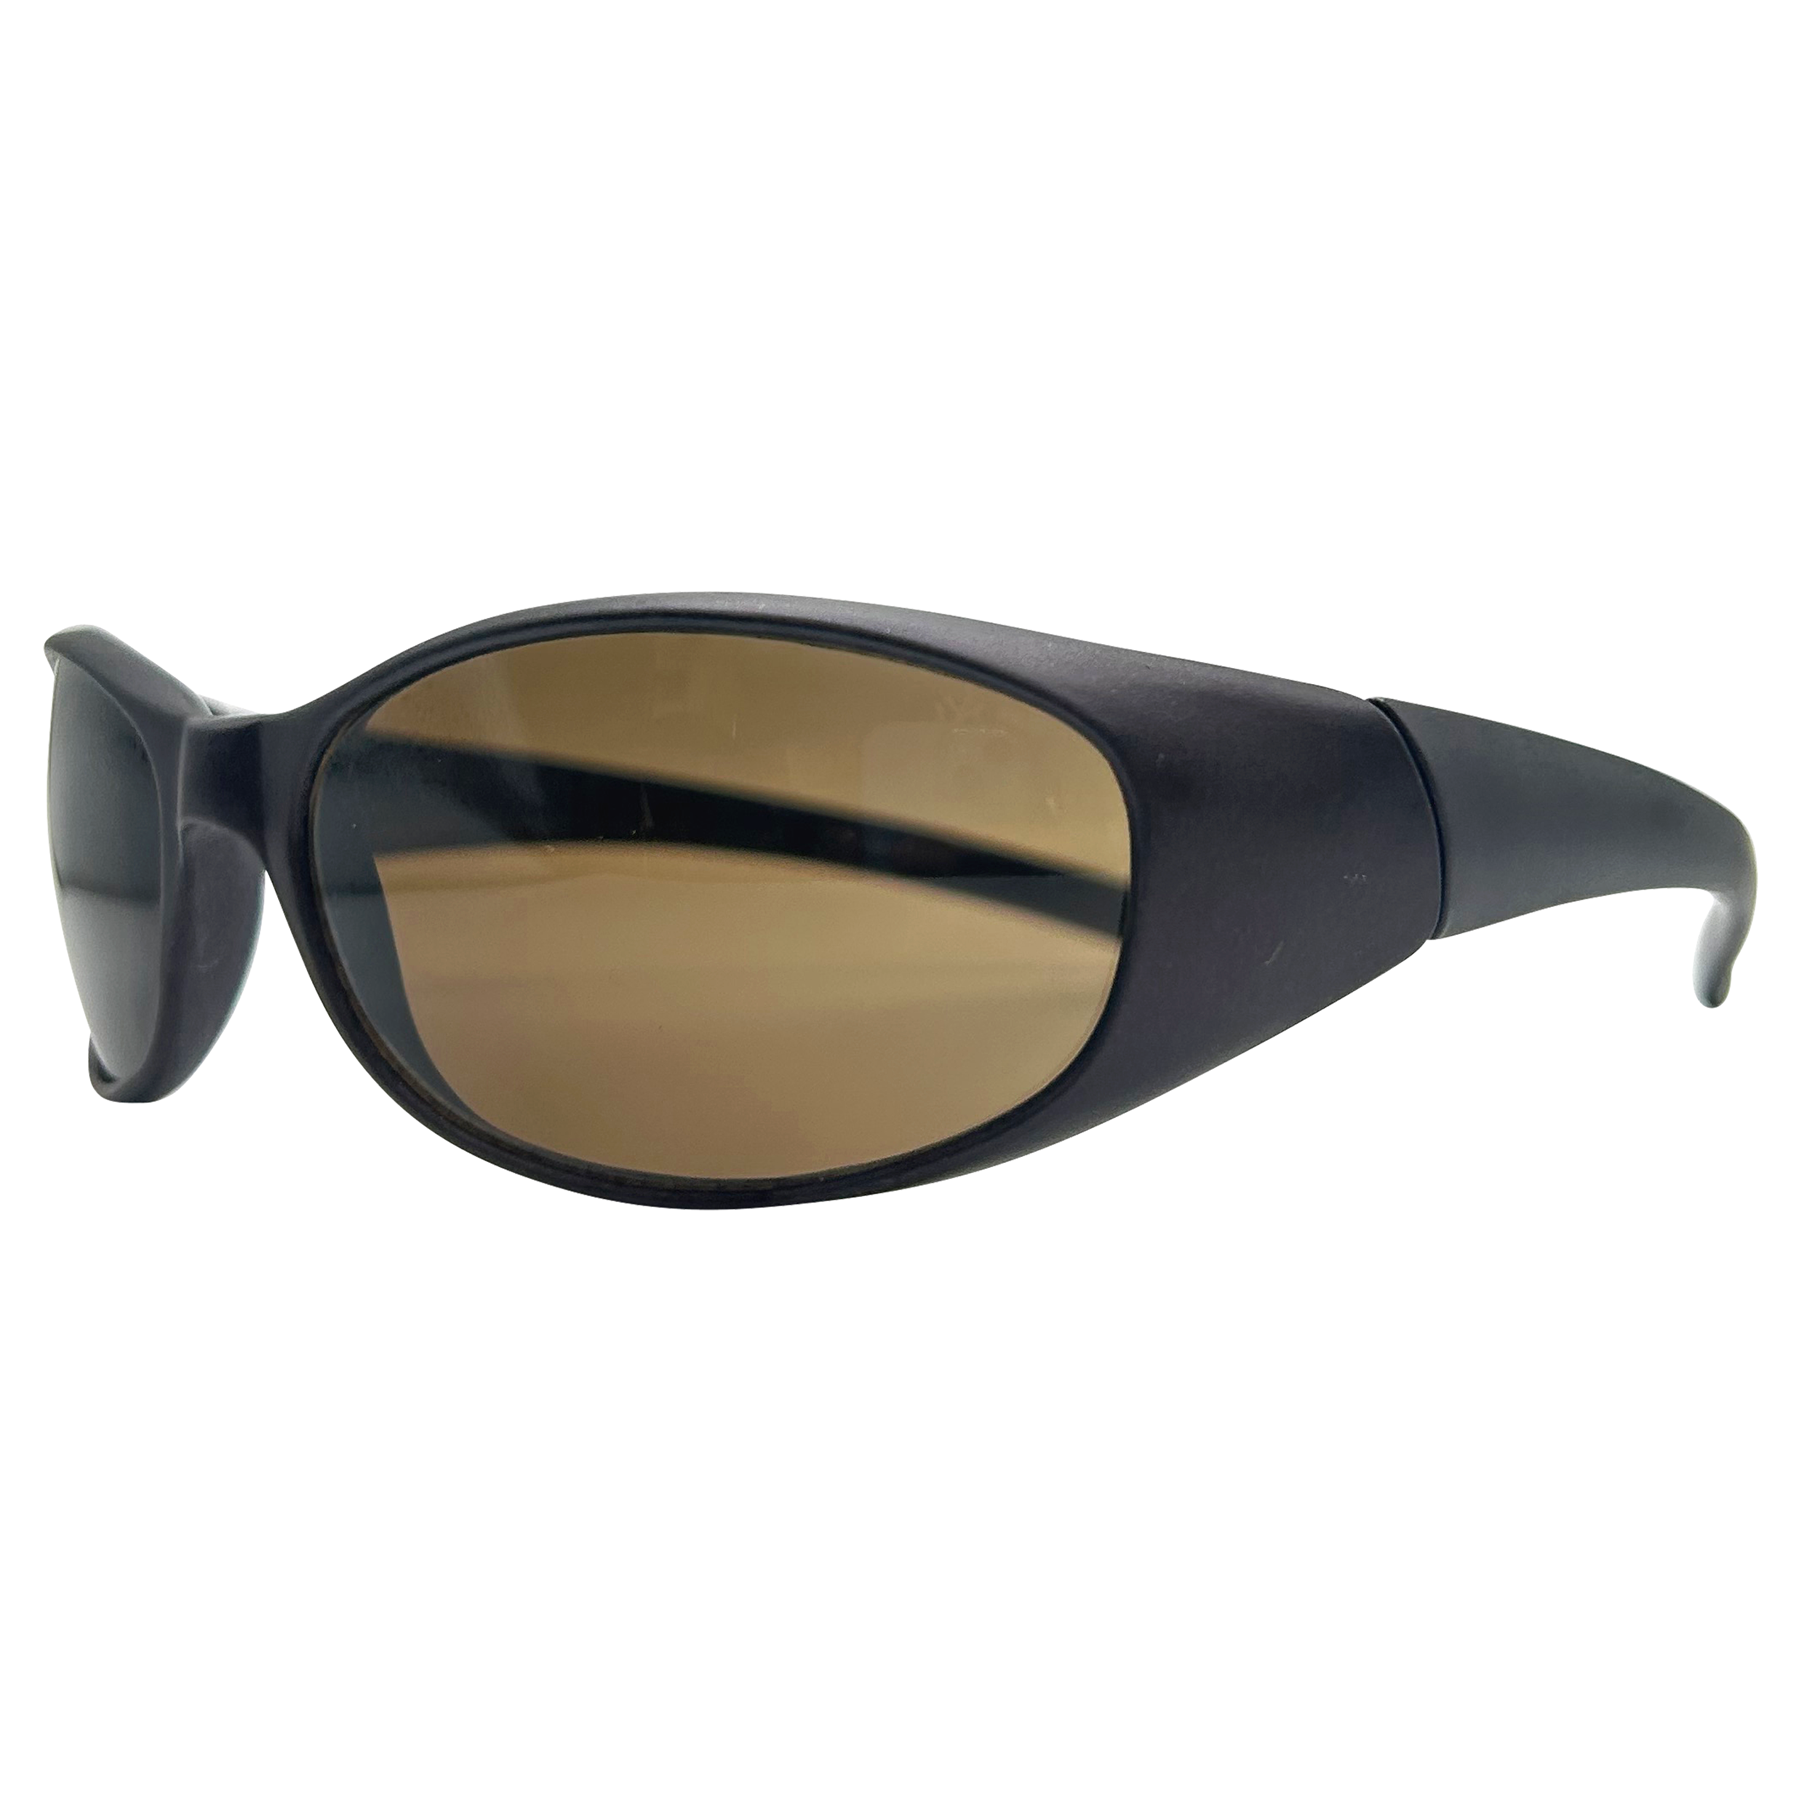 THE 405 Slim Oval Sports Sunglasses